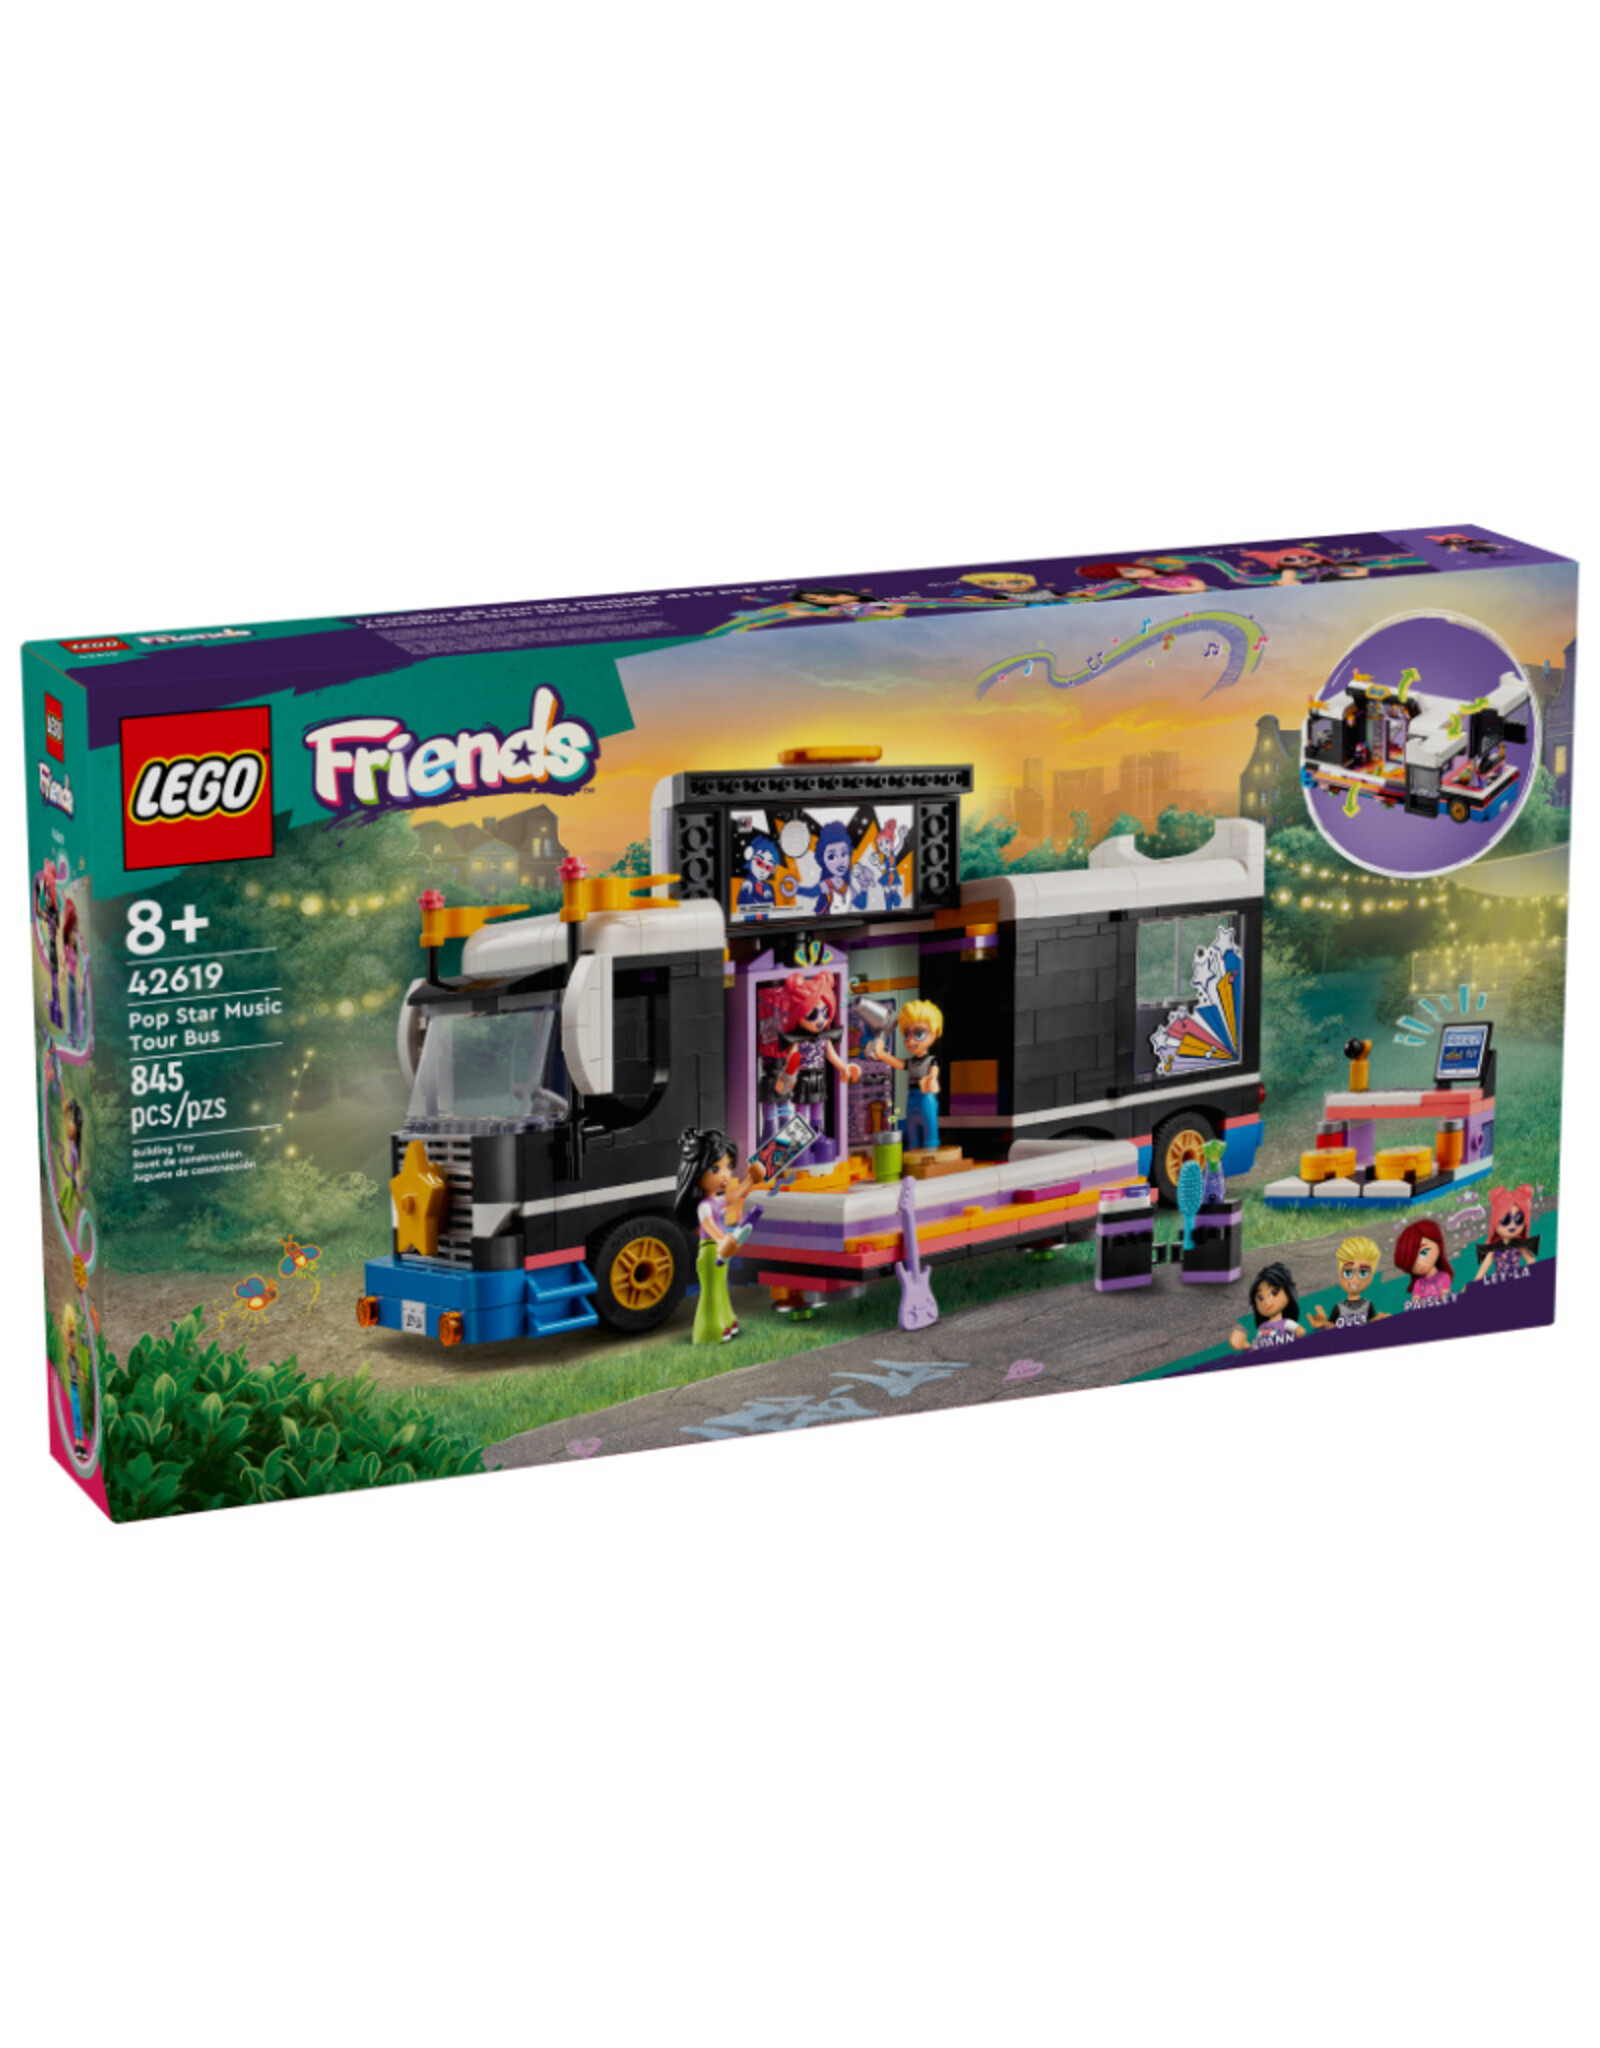 LEGO Friends 42619 Pop Star Music Tour Bus